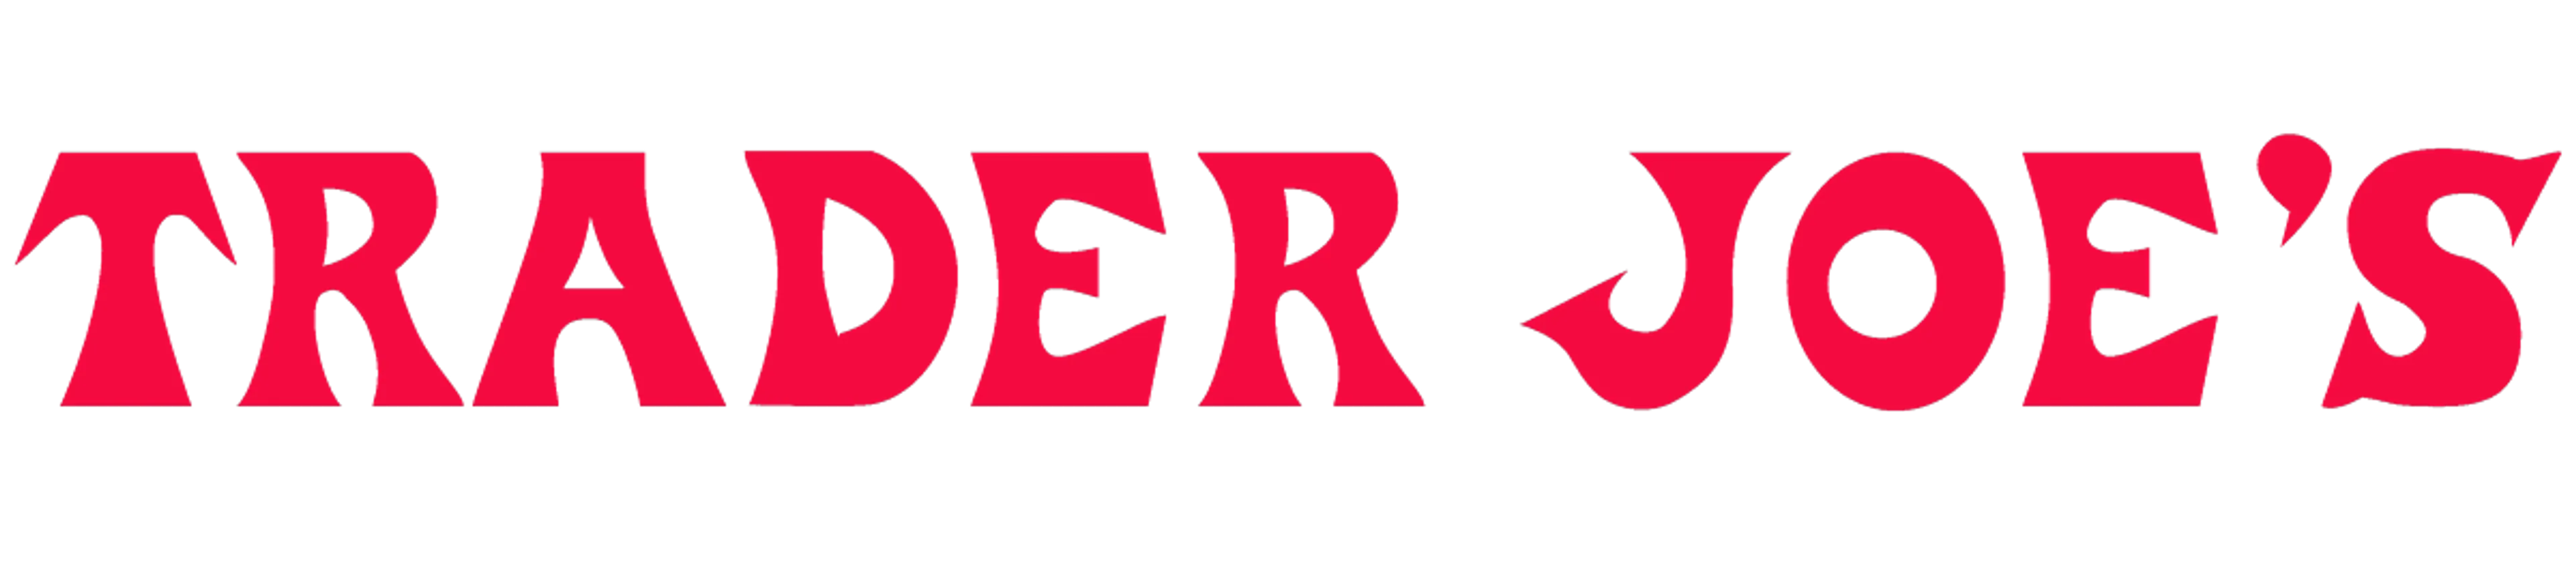 TRADER JOES logo